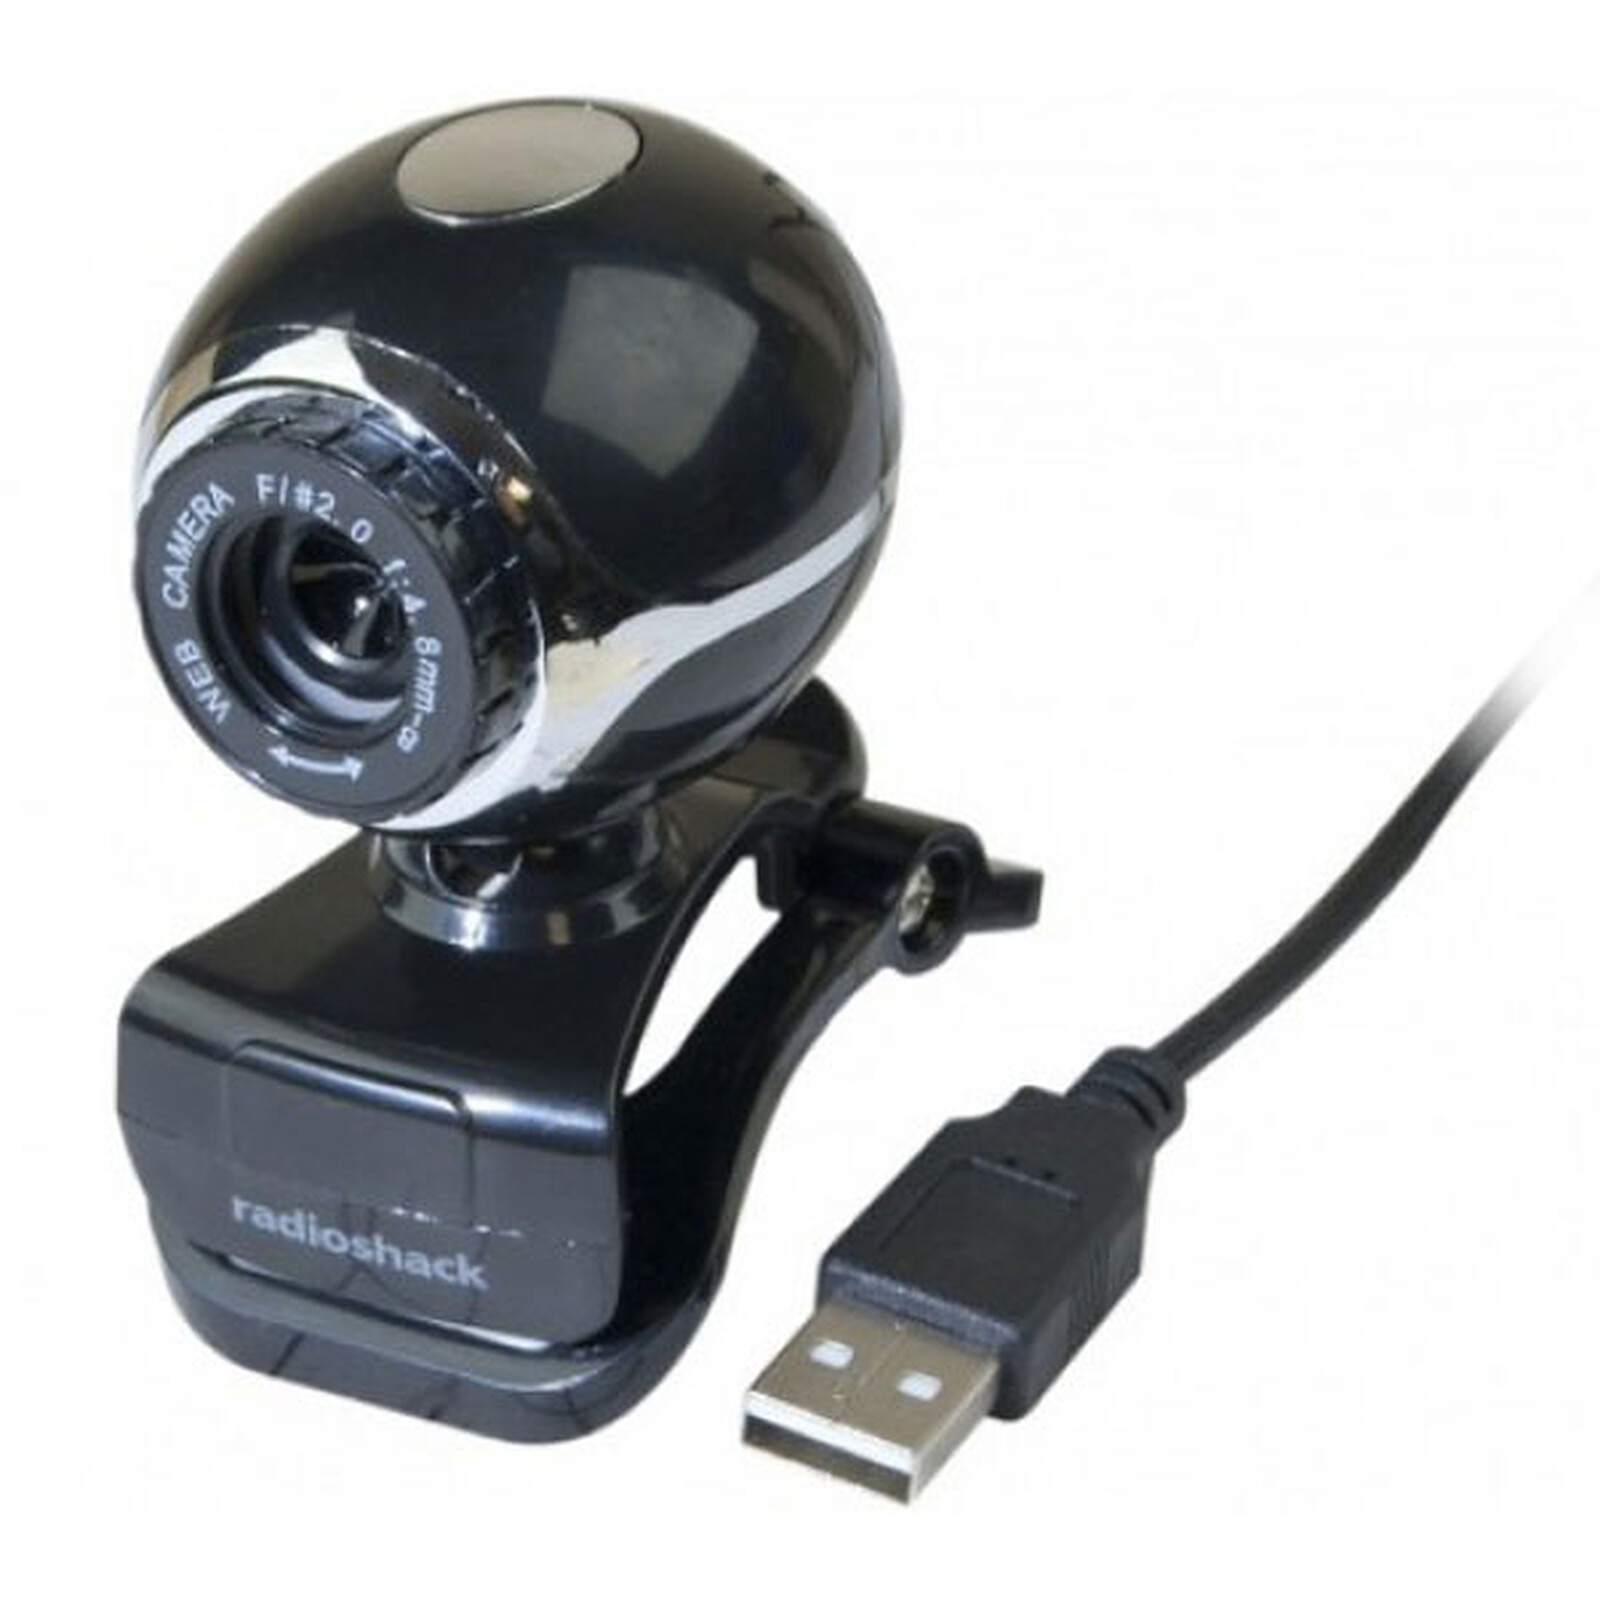 Webcam Full HD MCL Avec Micro